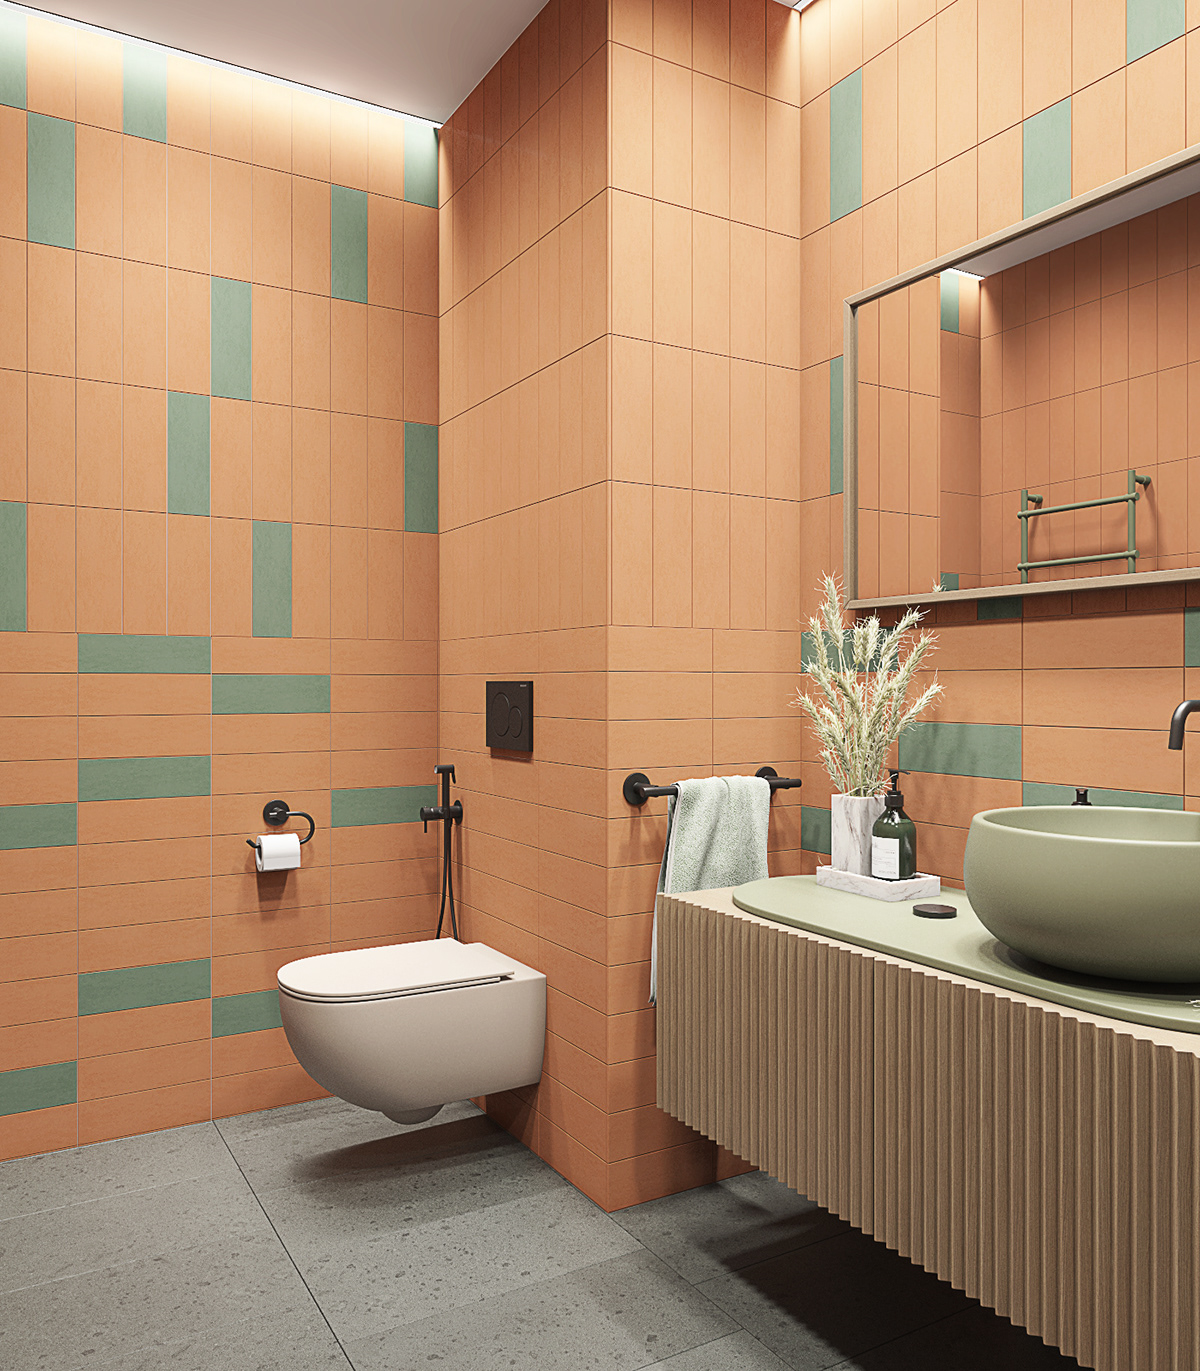 bathroom Interior modern SHOWER Sink Steam terracotta tiles toilet visualization